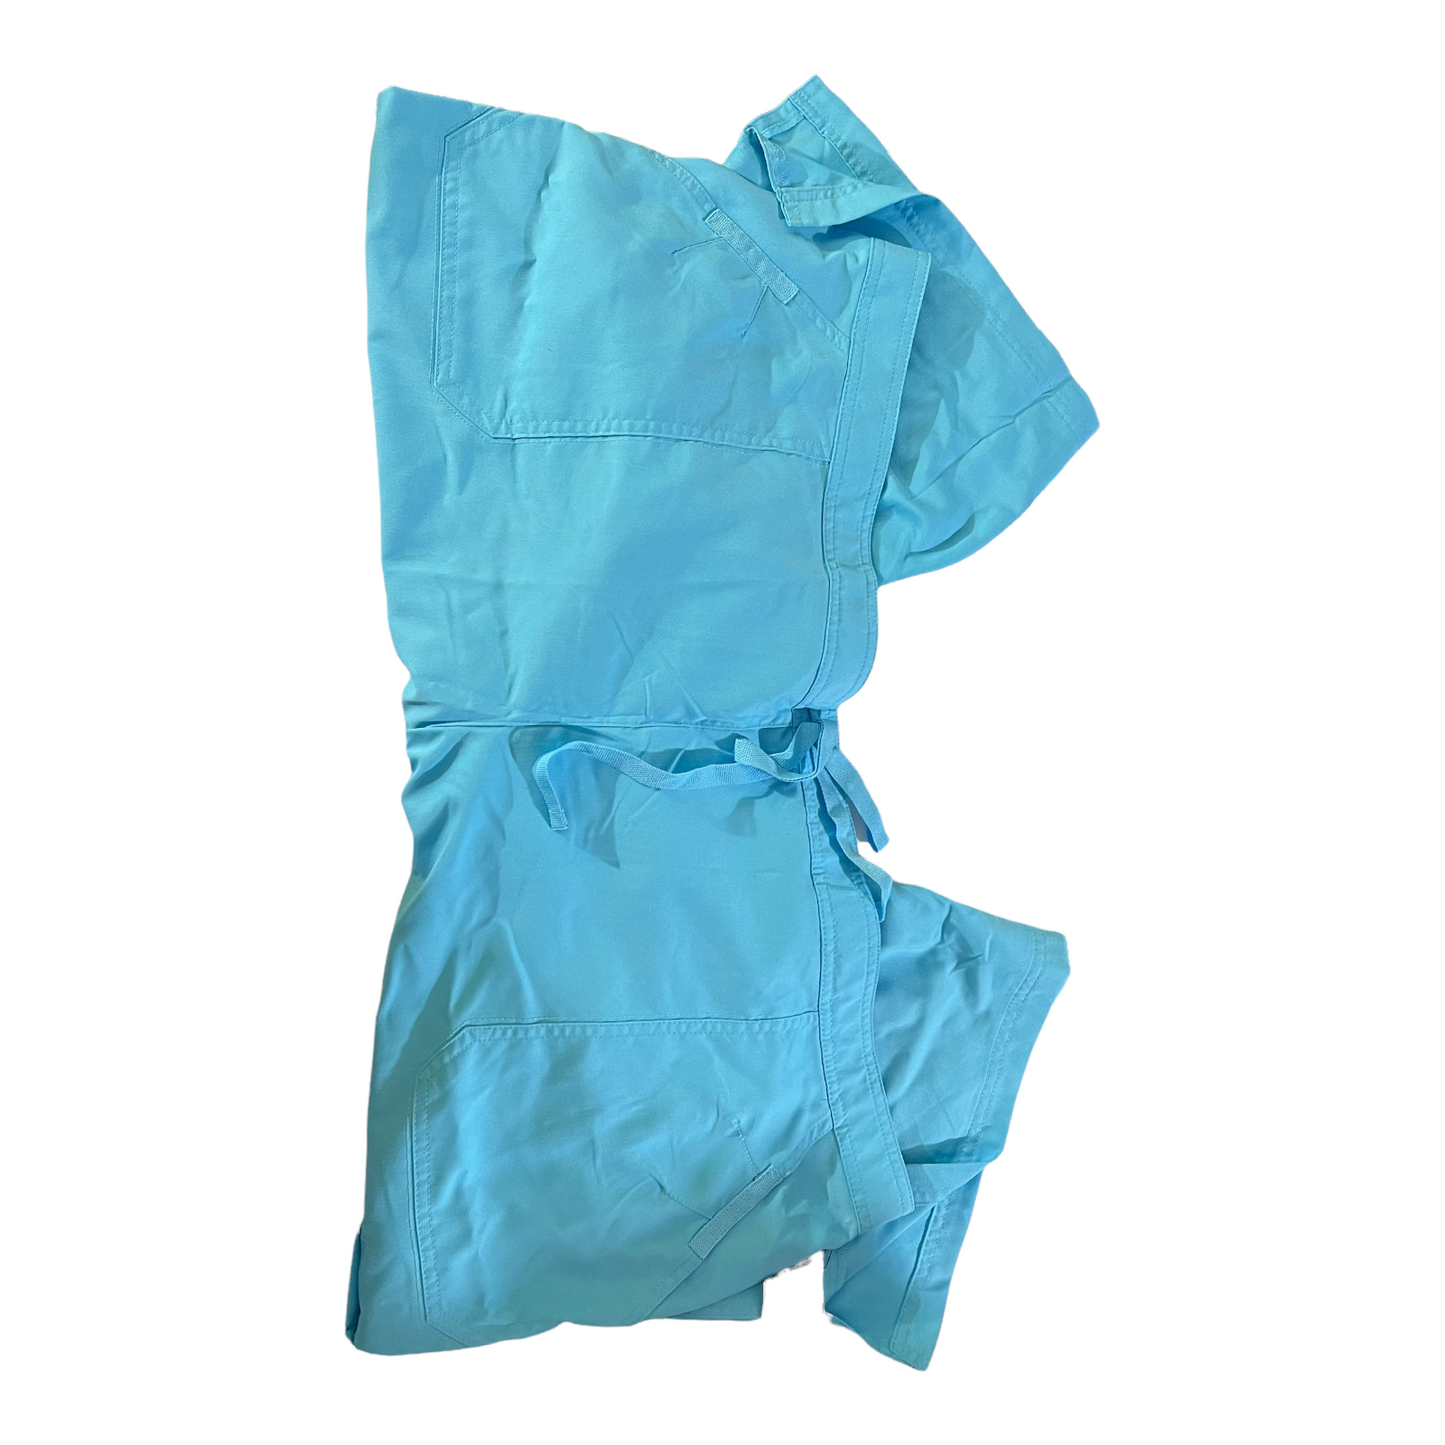 New Aqua Grey's Anatomy Scrubs Drawstring closure Fancy Pocket Size 4XL